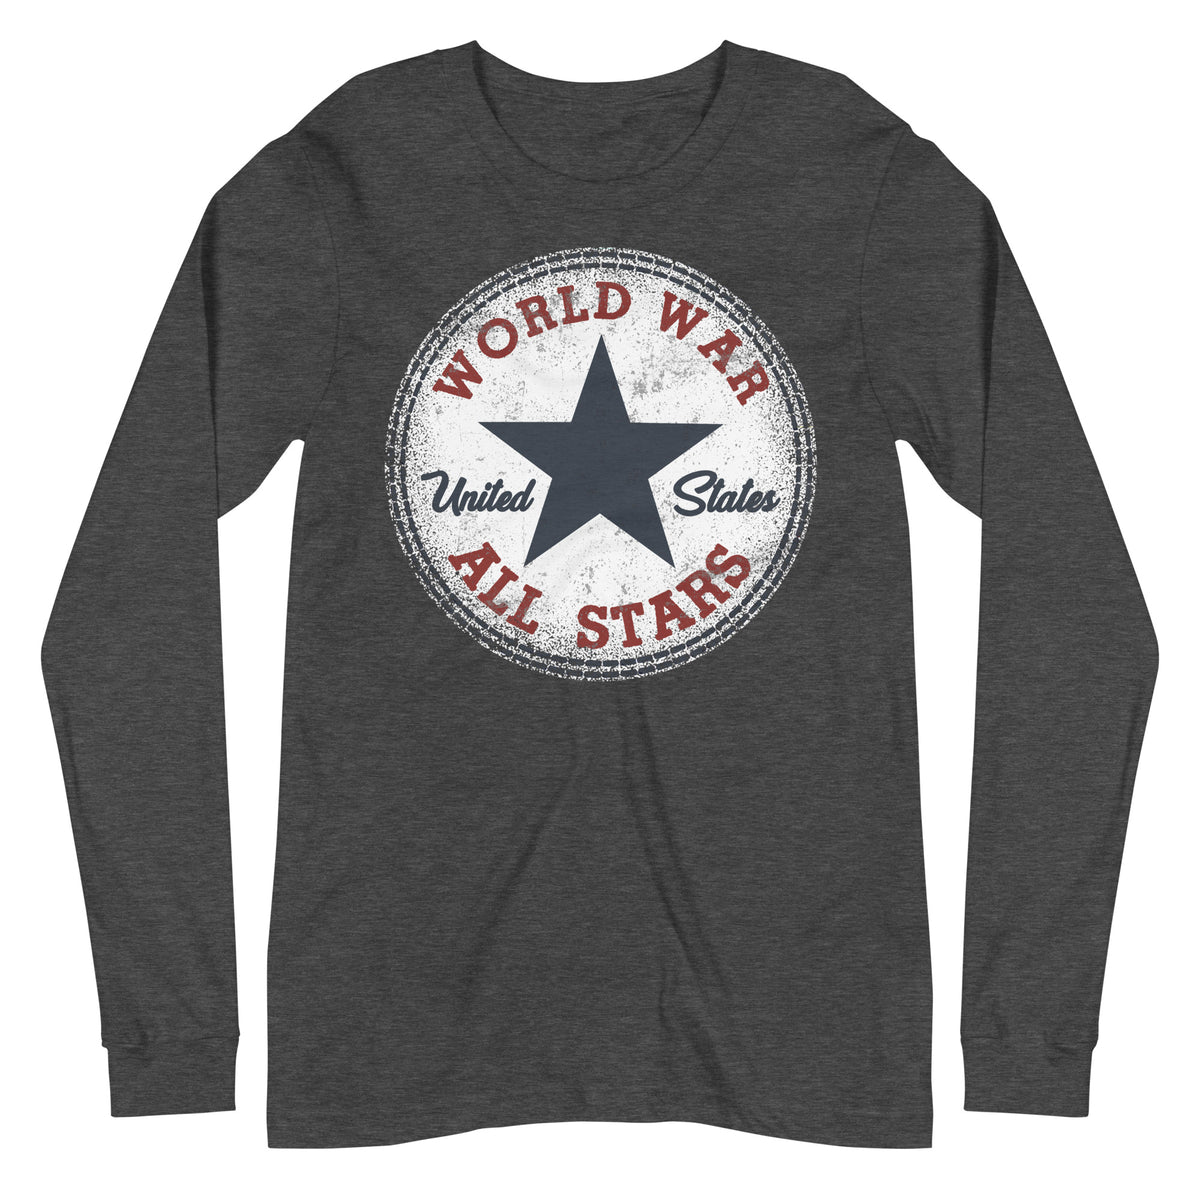 USA: World War All Stars Long Sleeve